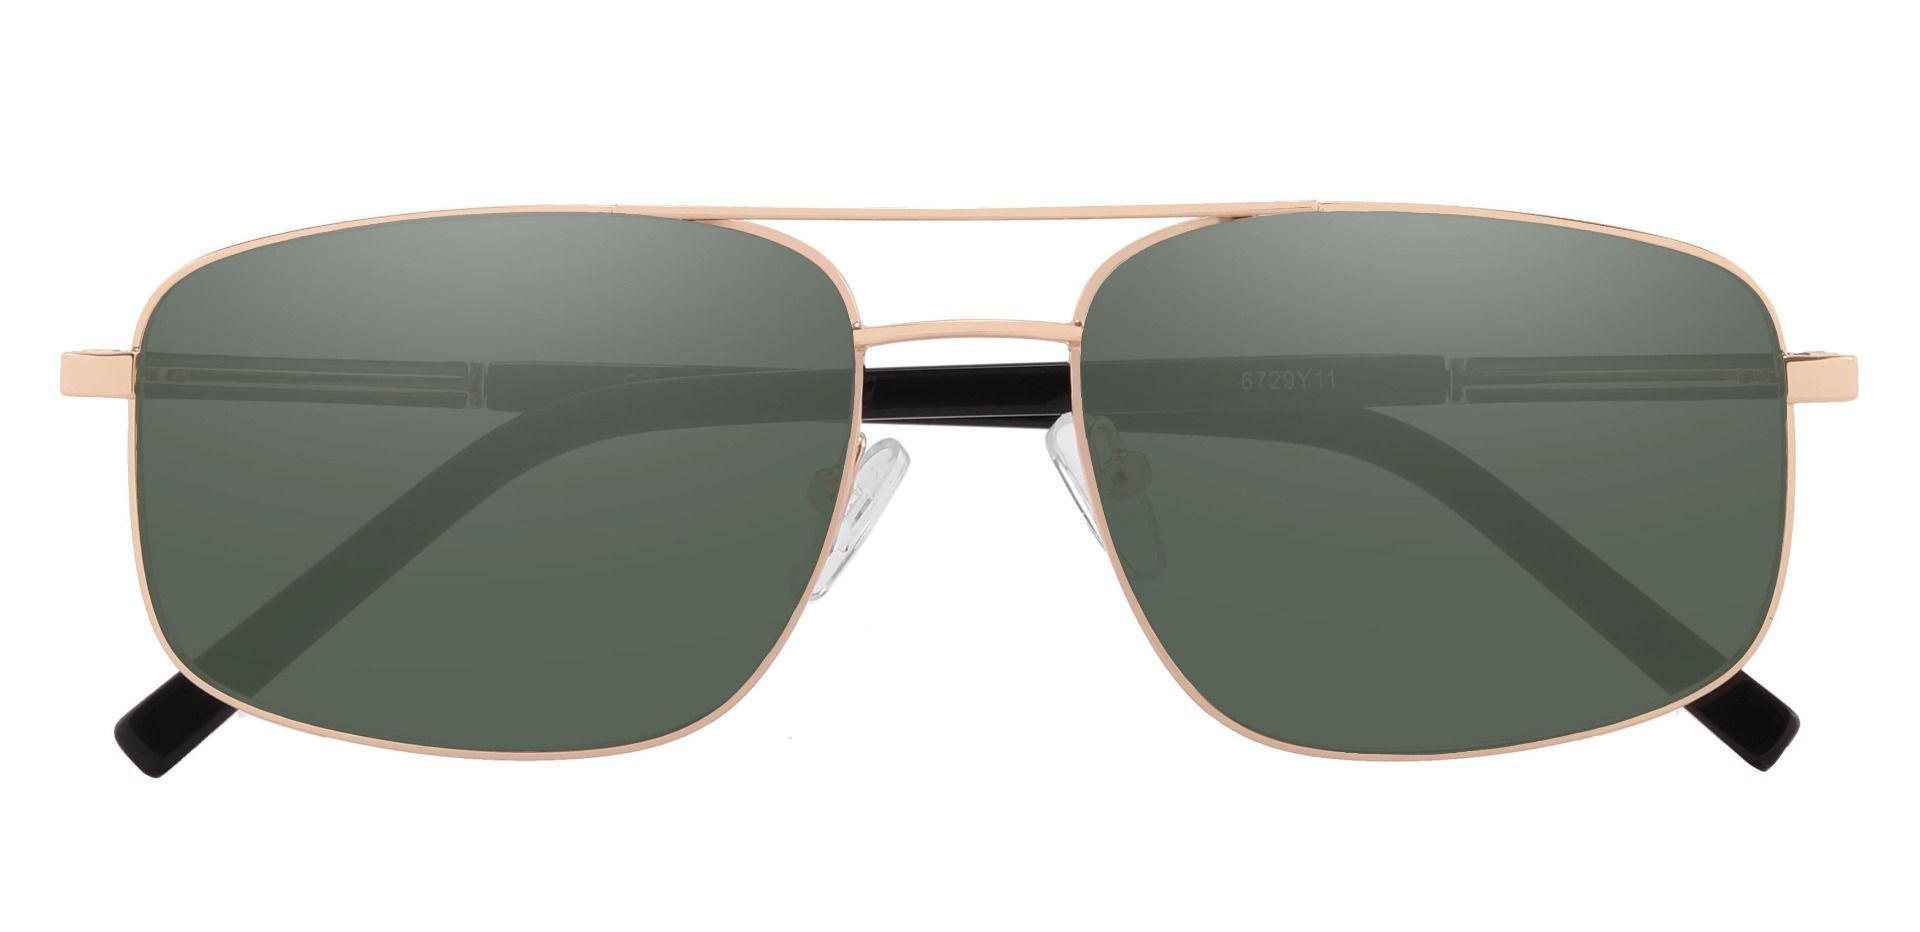 Davenport Aviator Non-Rx Sunglasses - Gold Frame With Green Lenses